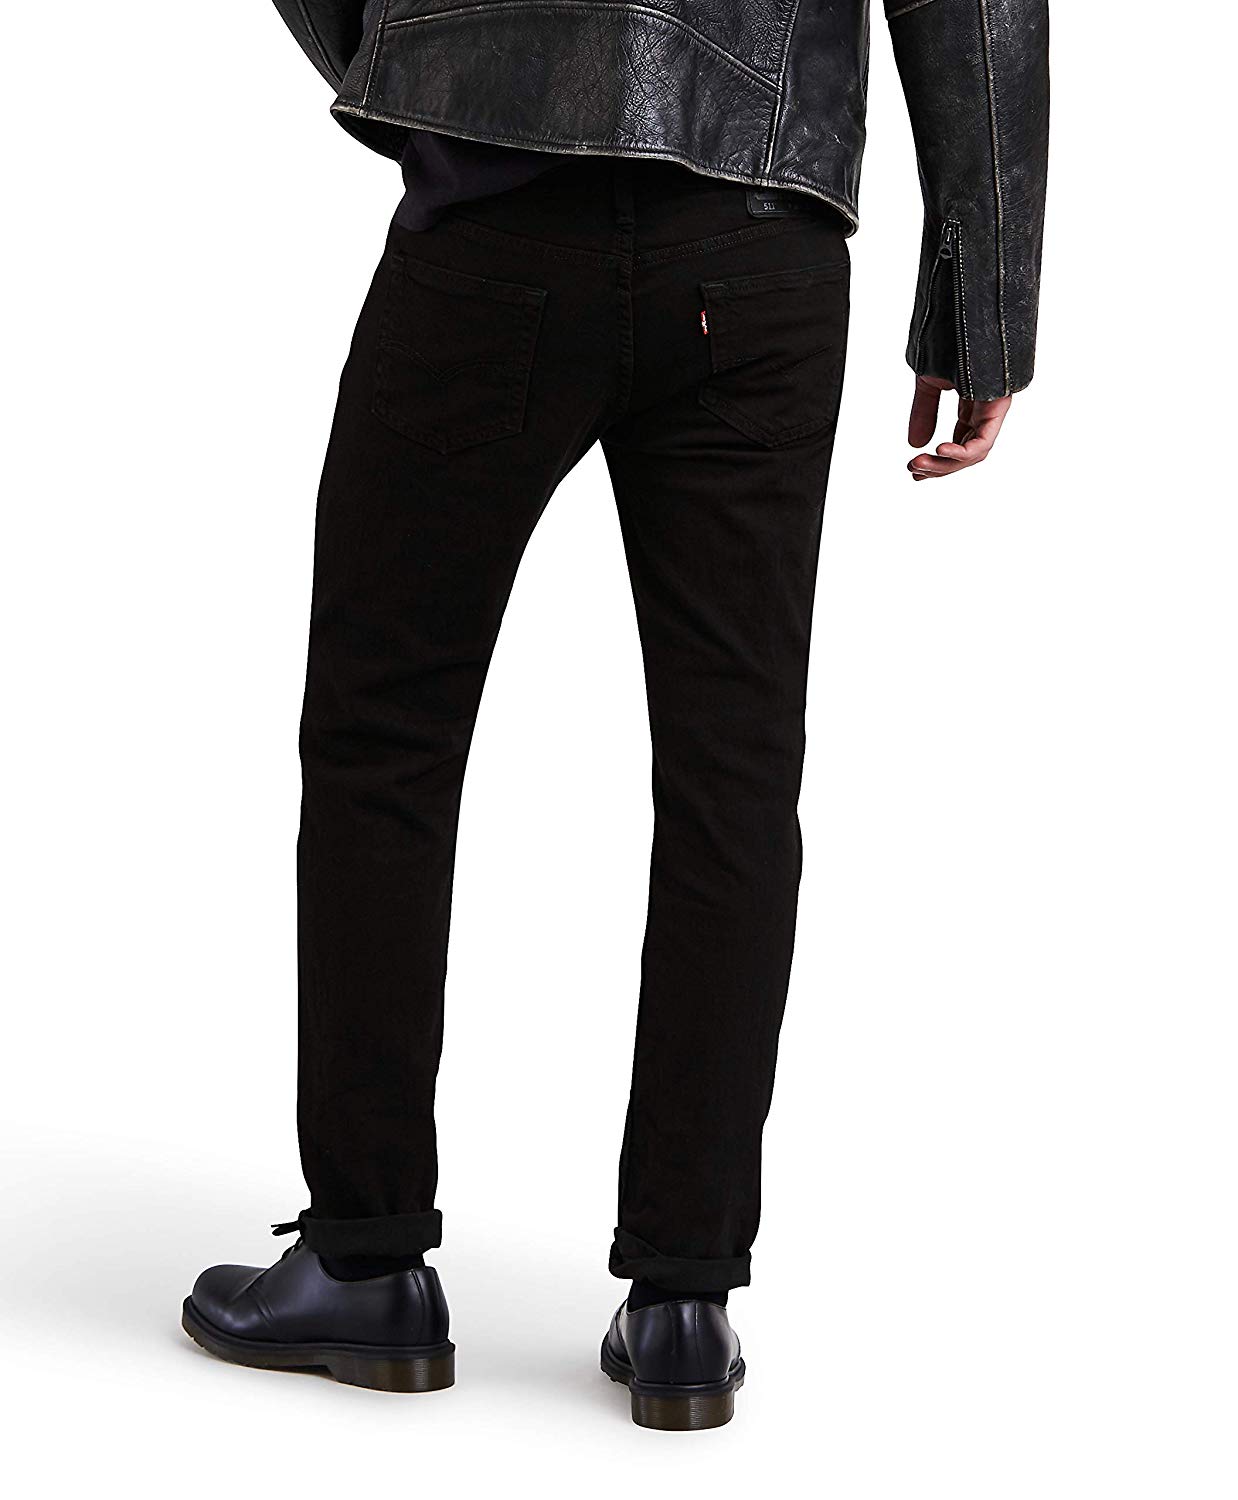 Levi's Men's 511 Slim Fit Jean, Black - Stretch, 32W x, Black, Size 32W ...